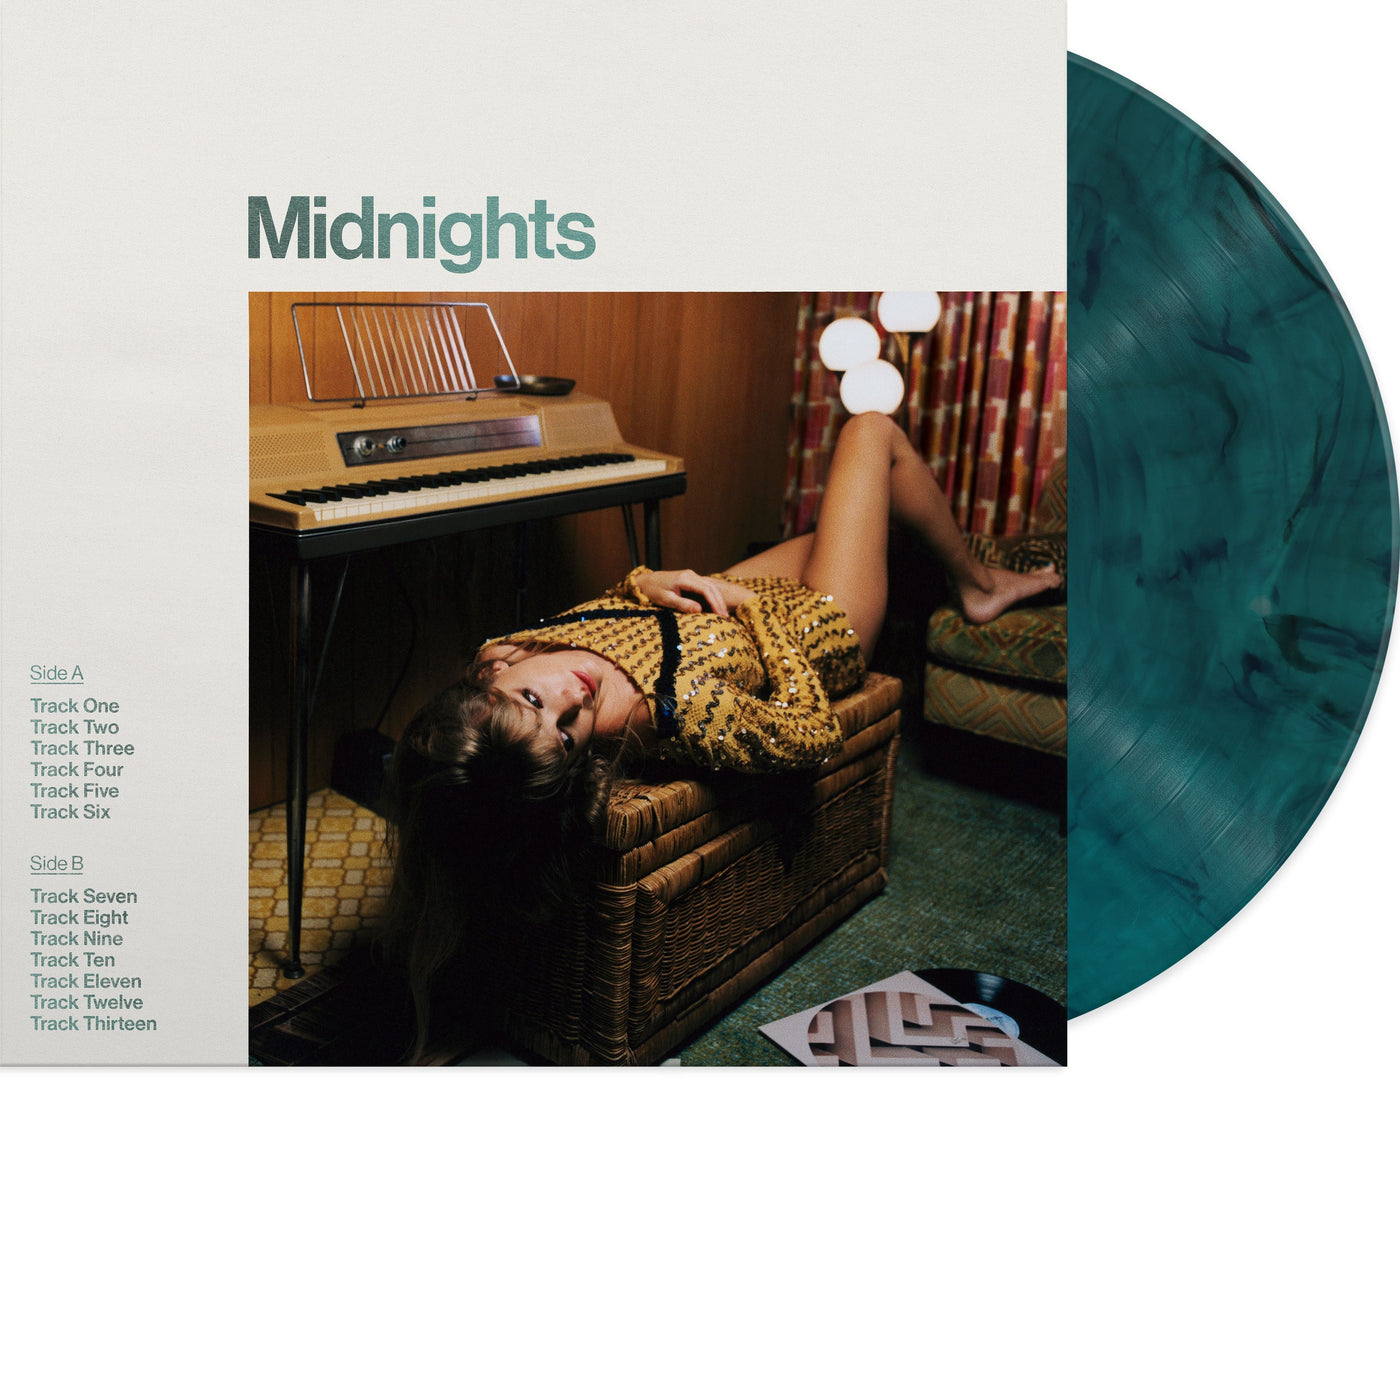 NEW/SEALED! Taylor Swift - Midnights (Jade Green Edition LP)